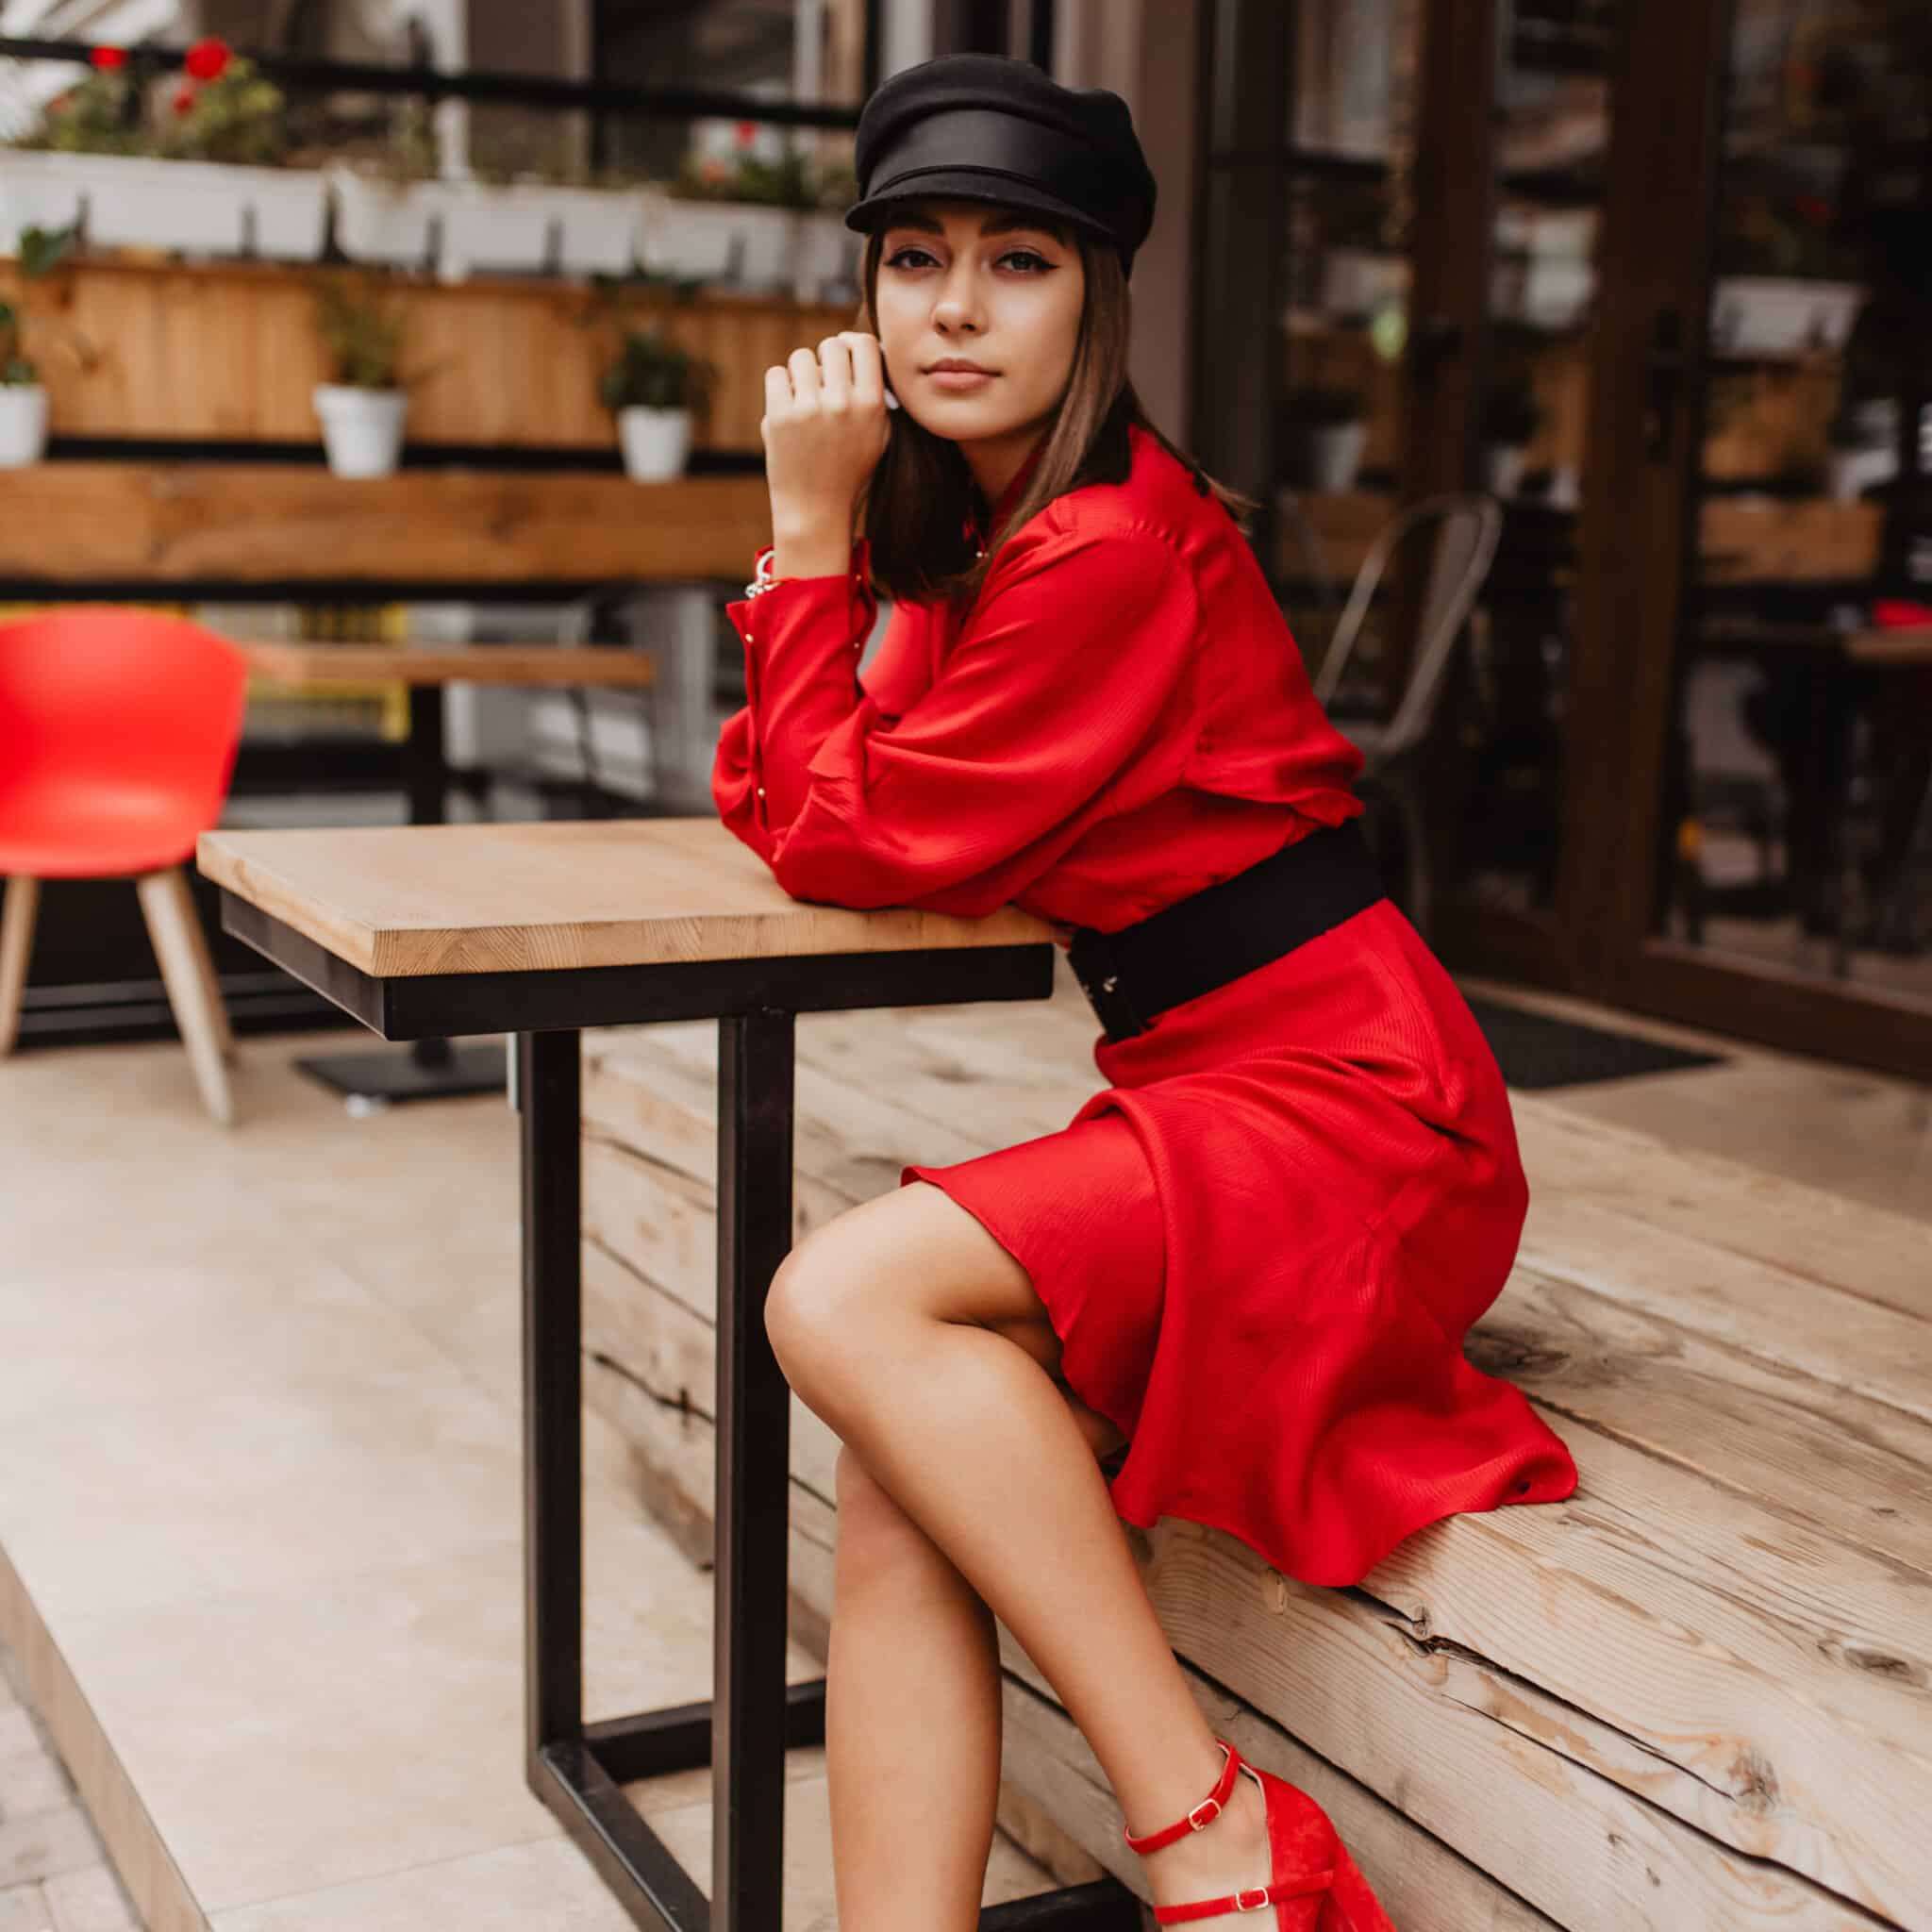 femme qui prend un cafe en robe rouge edited scaled